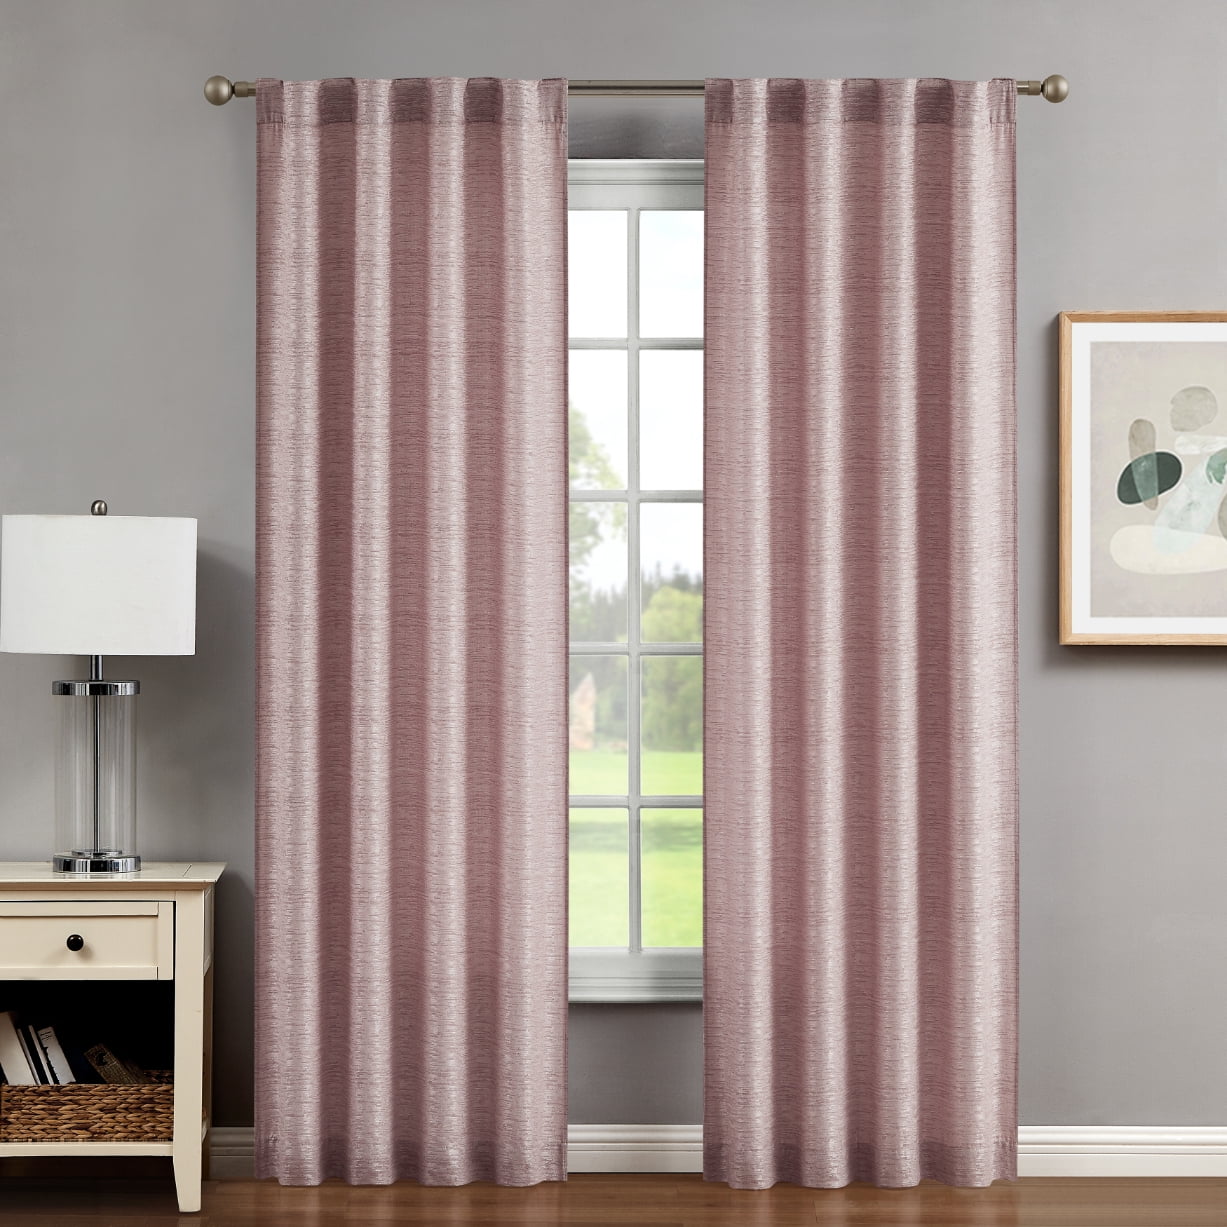 New Beautiful Modern Design & Best Quality Luxury Jacquard ROSA Curtain Pair 